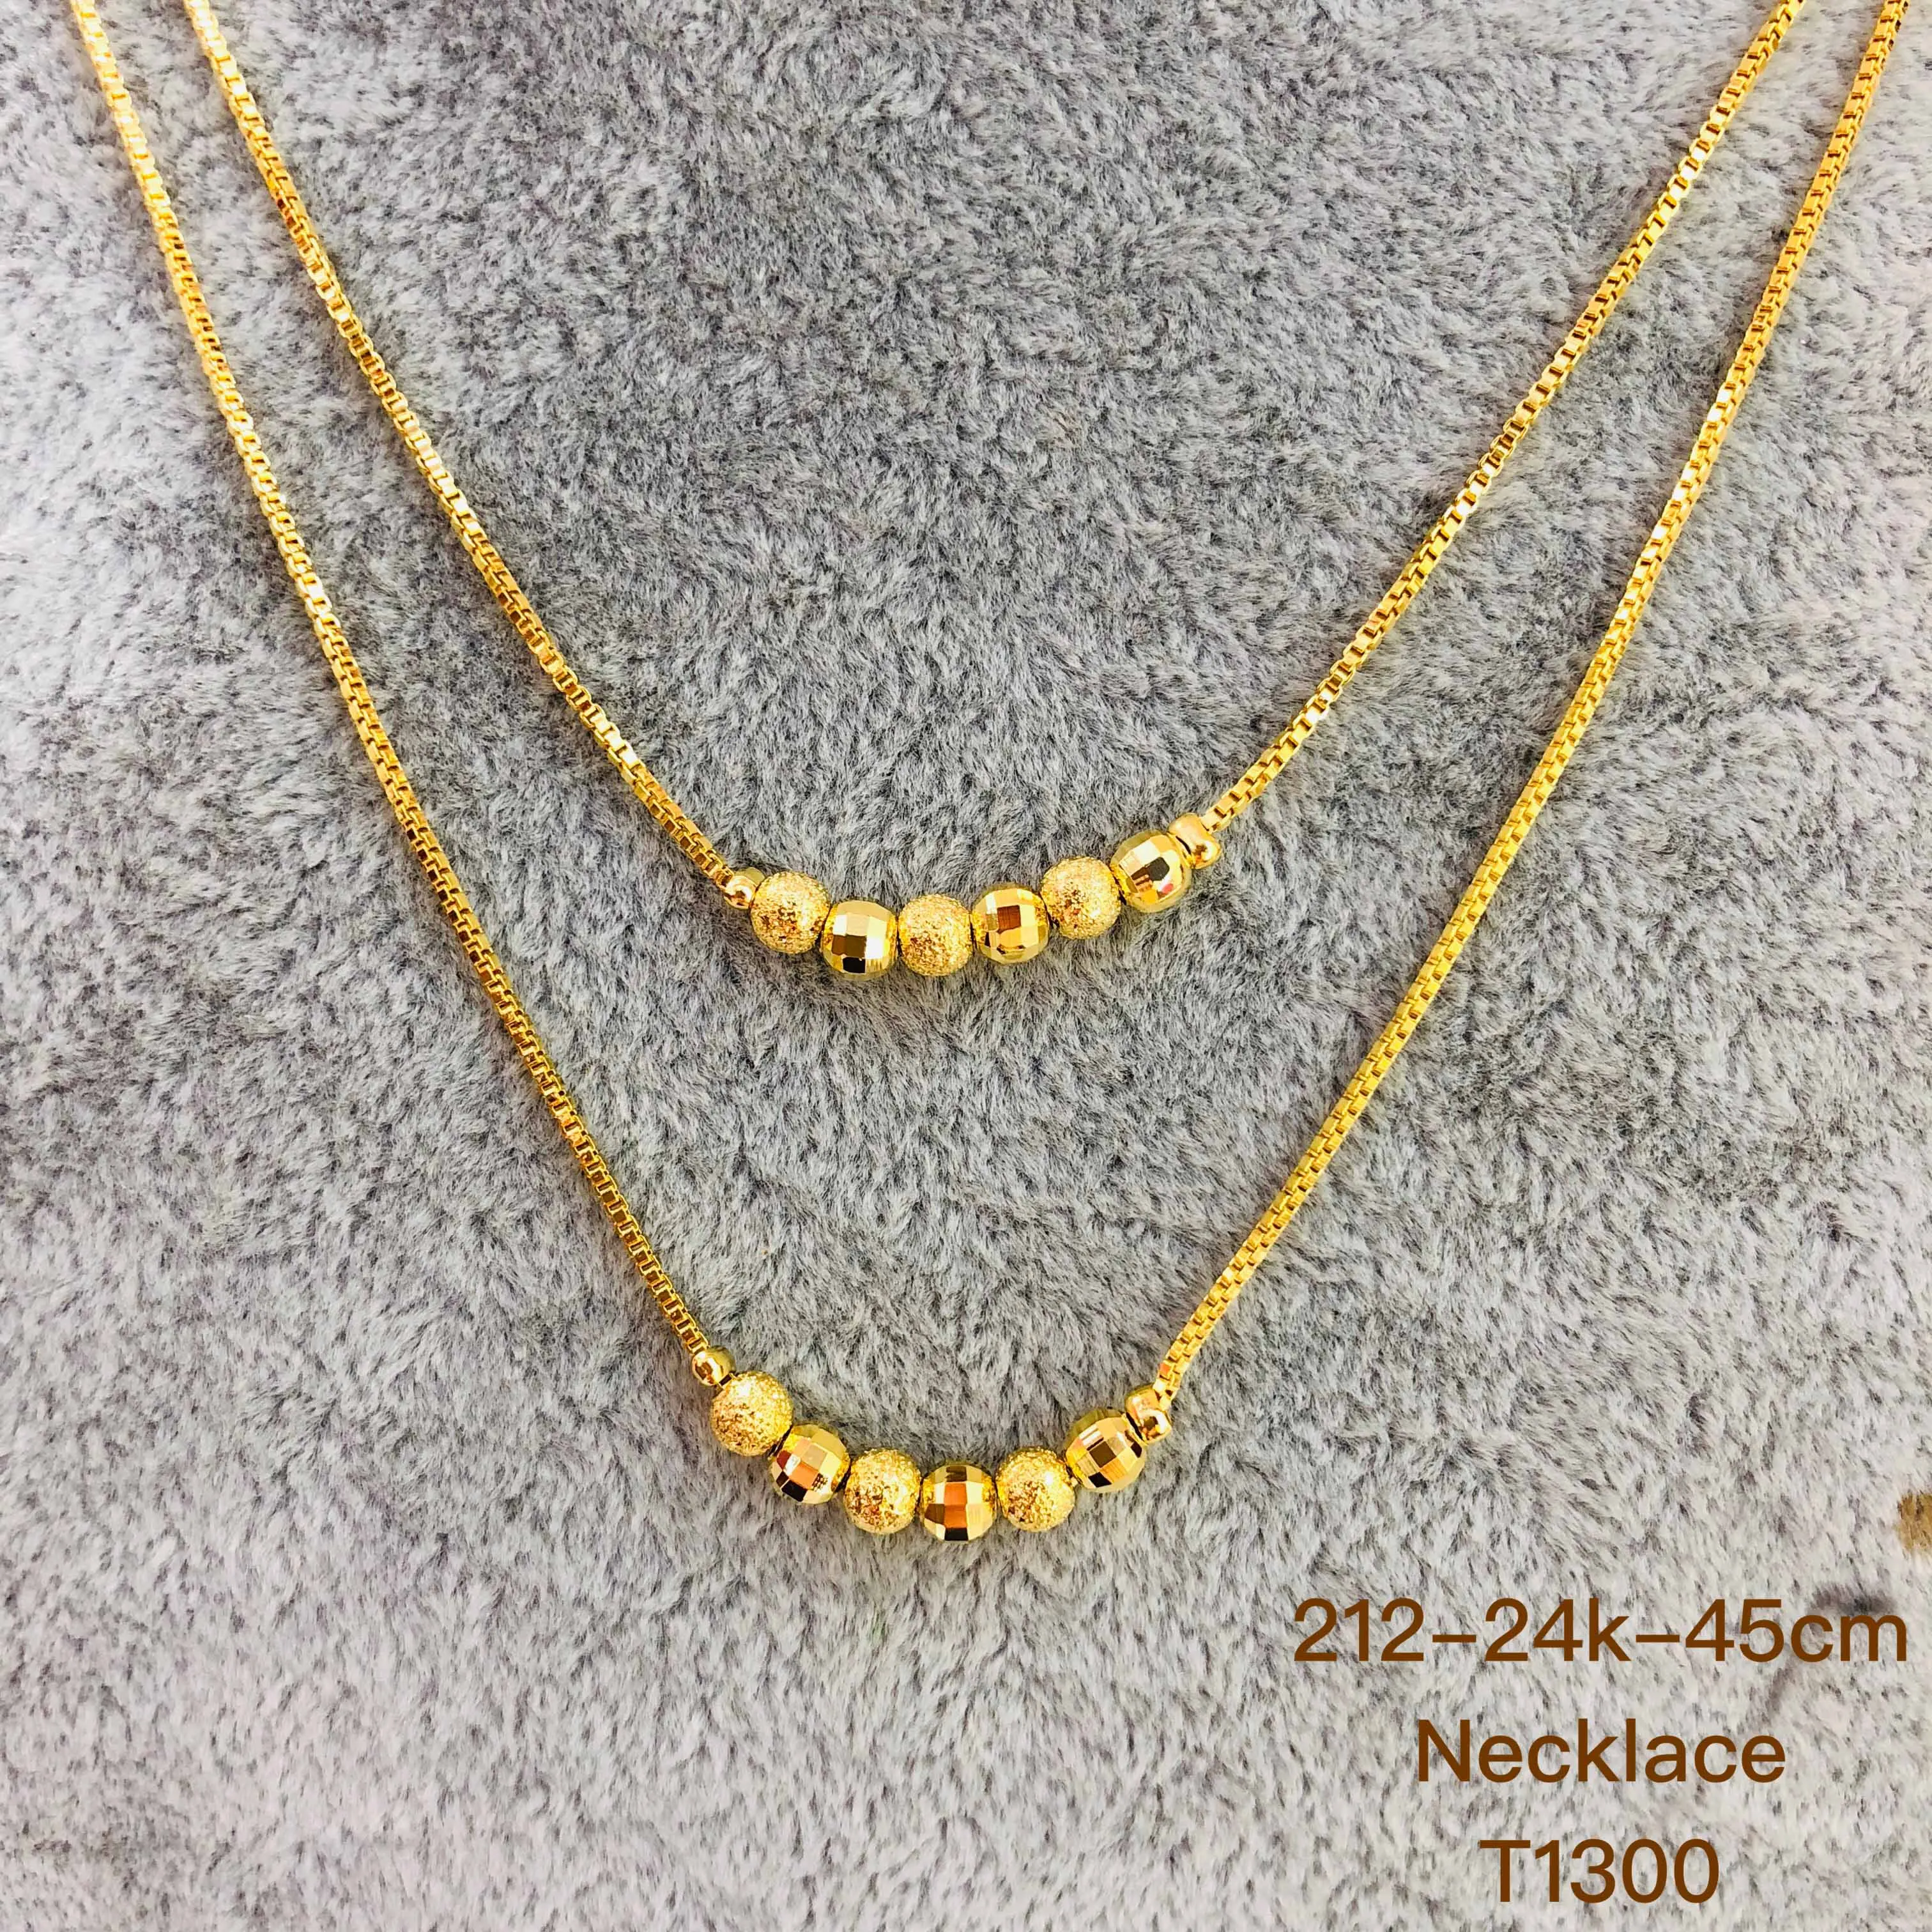 Buy 24k Gold Pendant Necklace,Fashion 